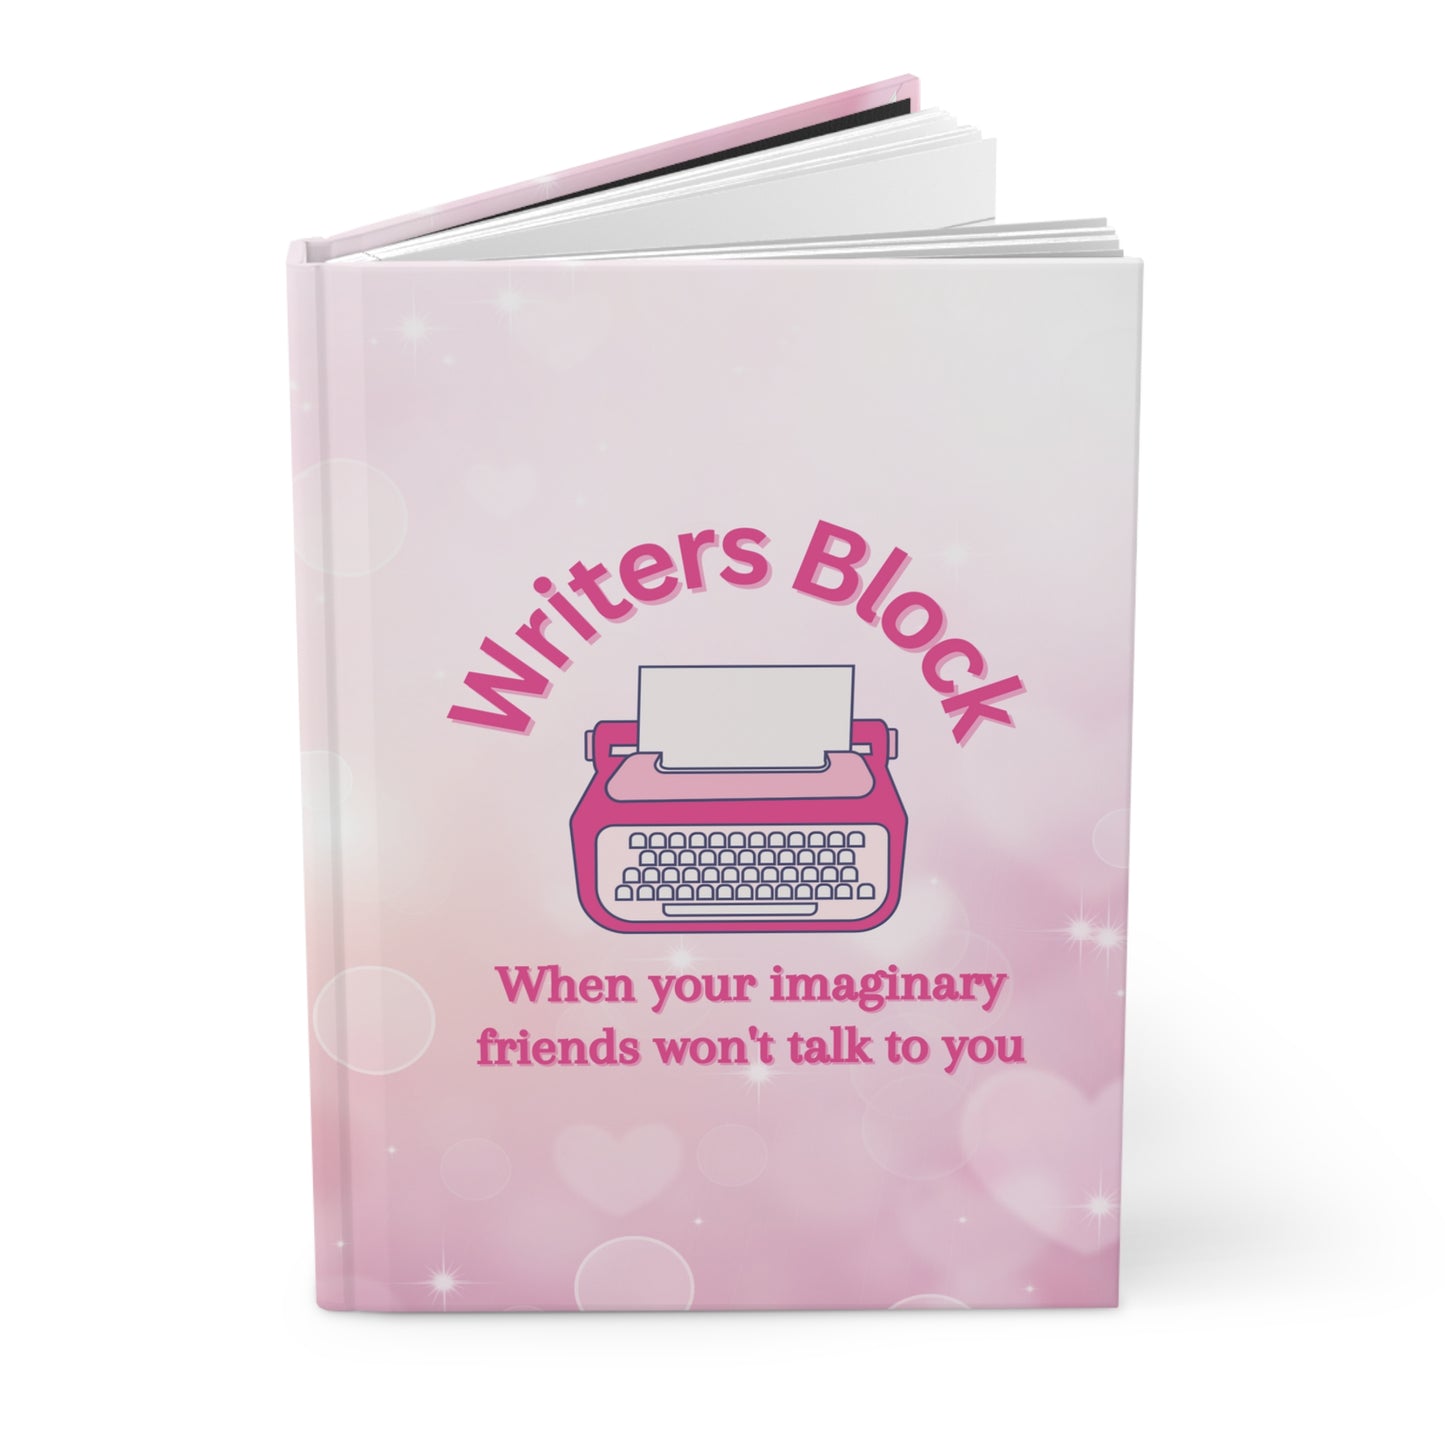 Romance Author Journal: Writers Block